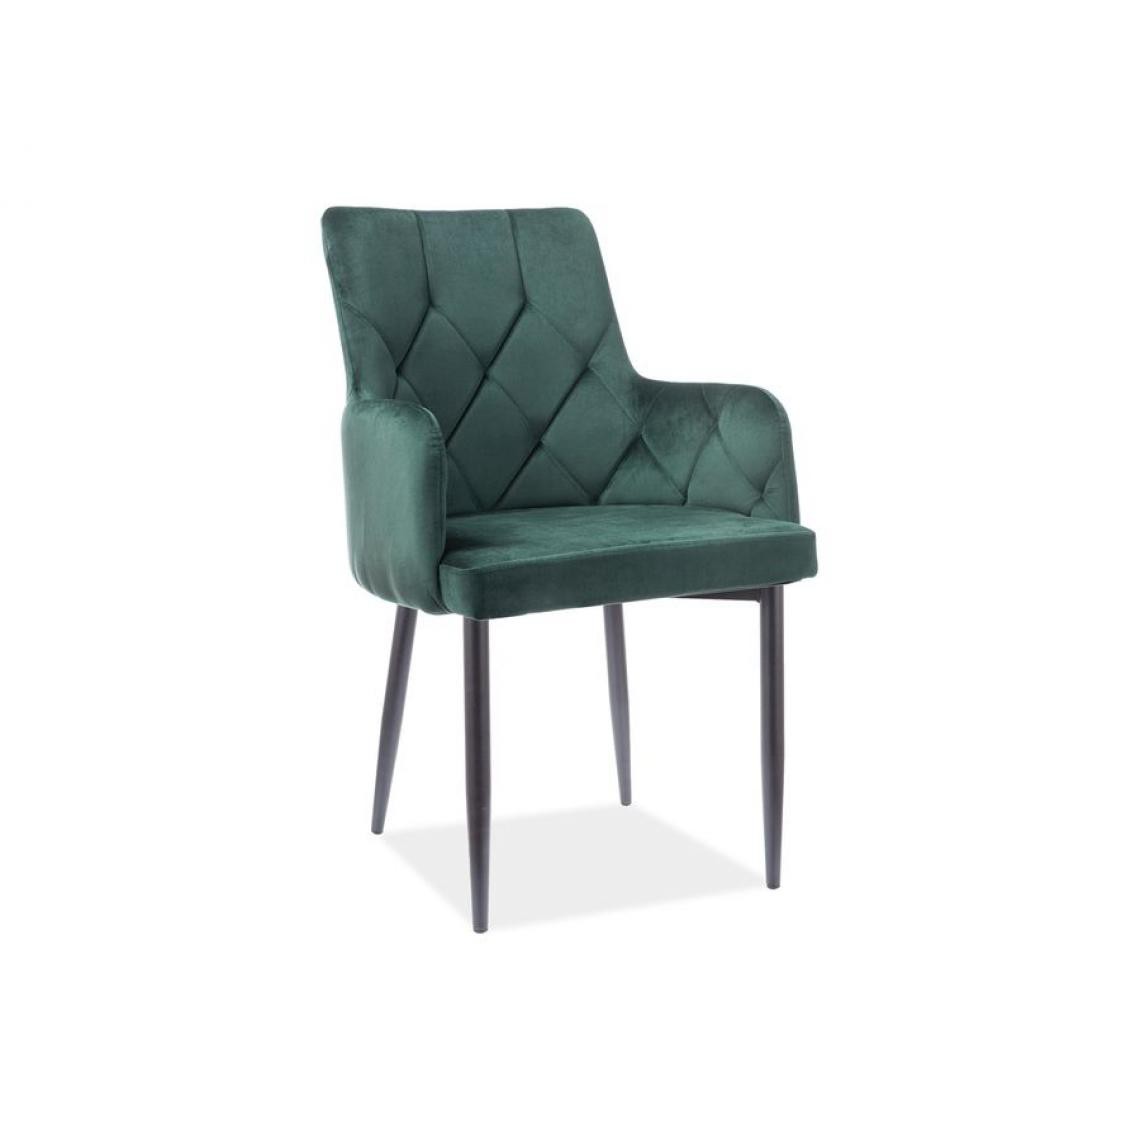 Hucoco - RICAROF - Chaise style glamour salon/salle à manger - 88x57x45 cm - Vert - Chaises